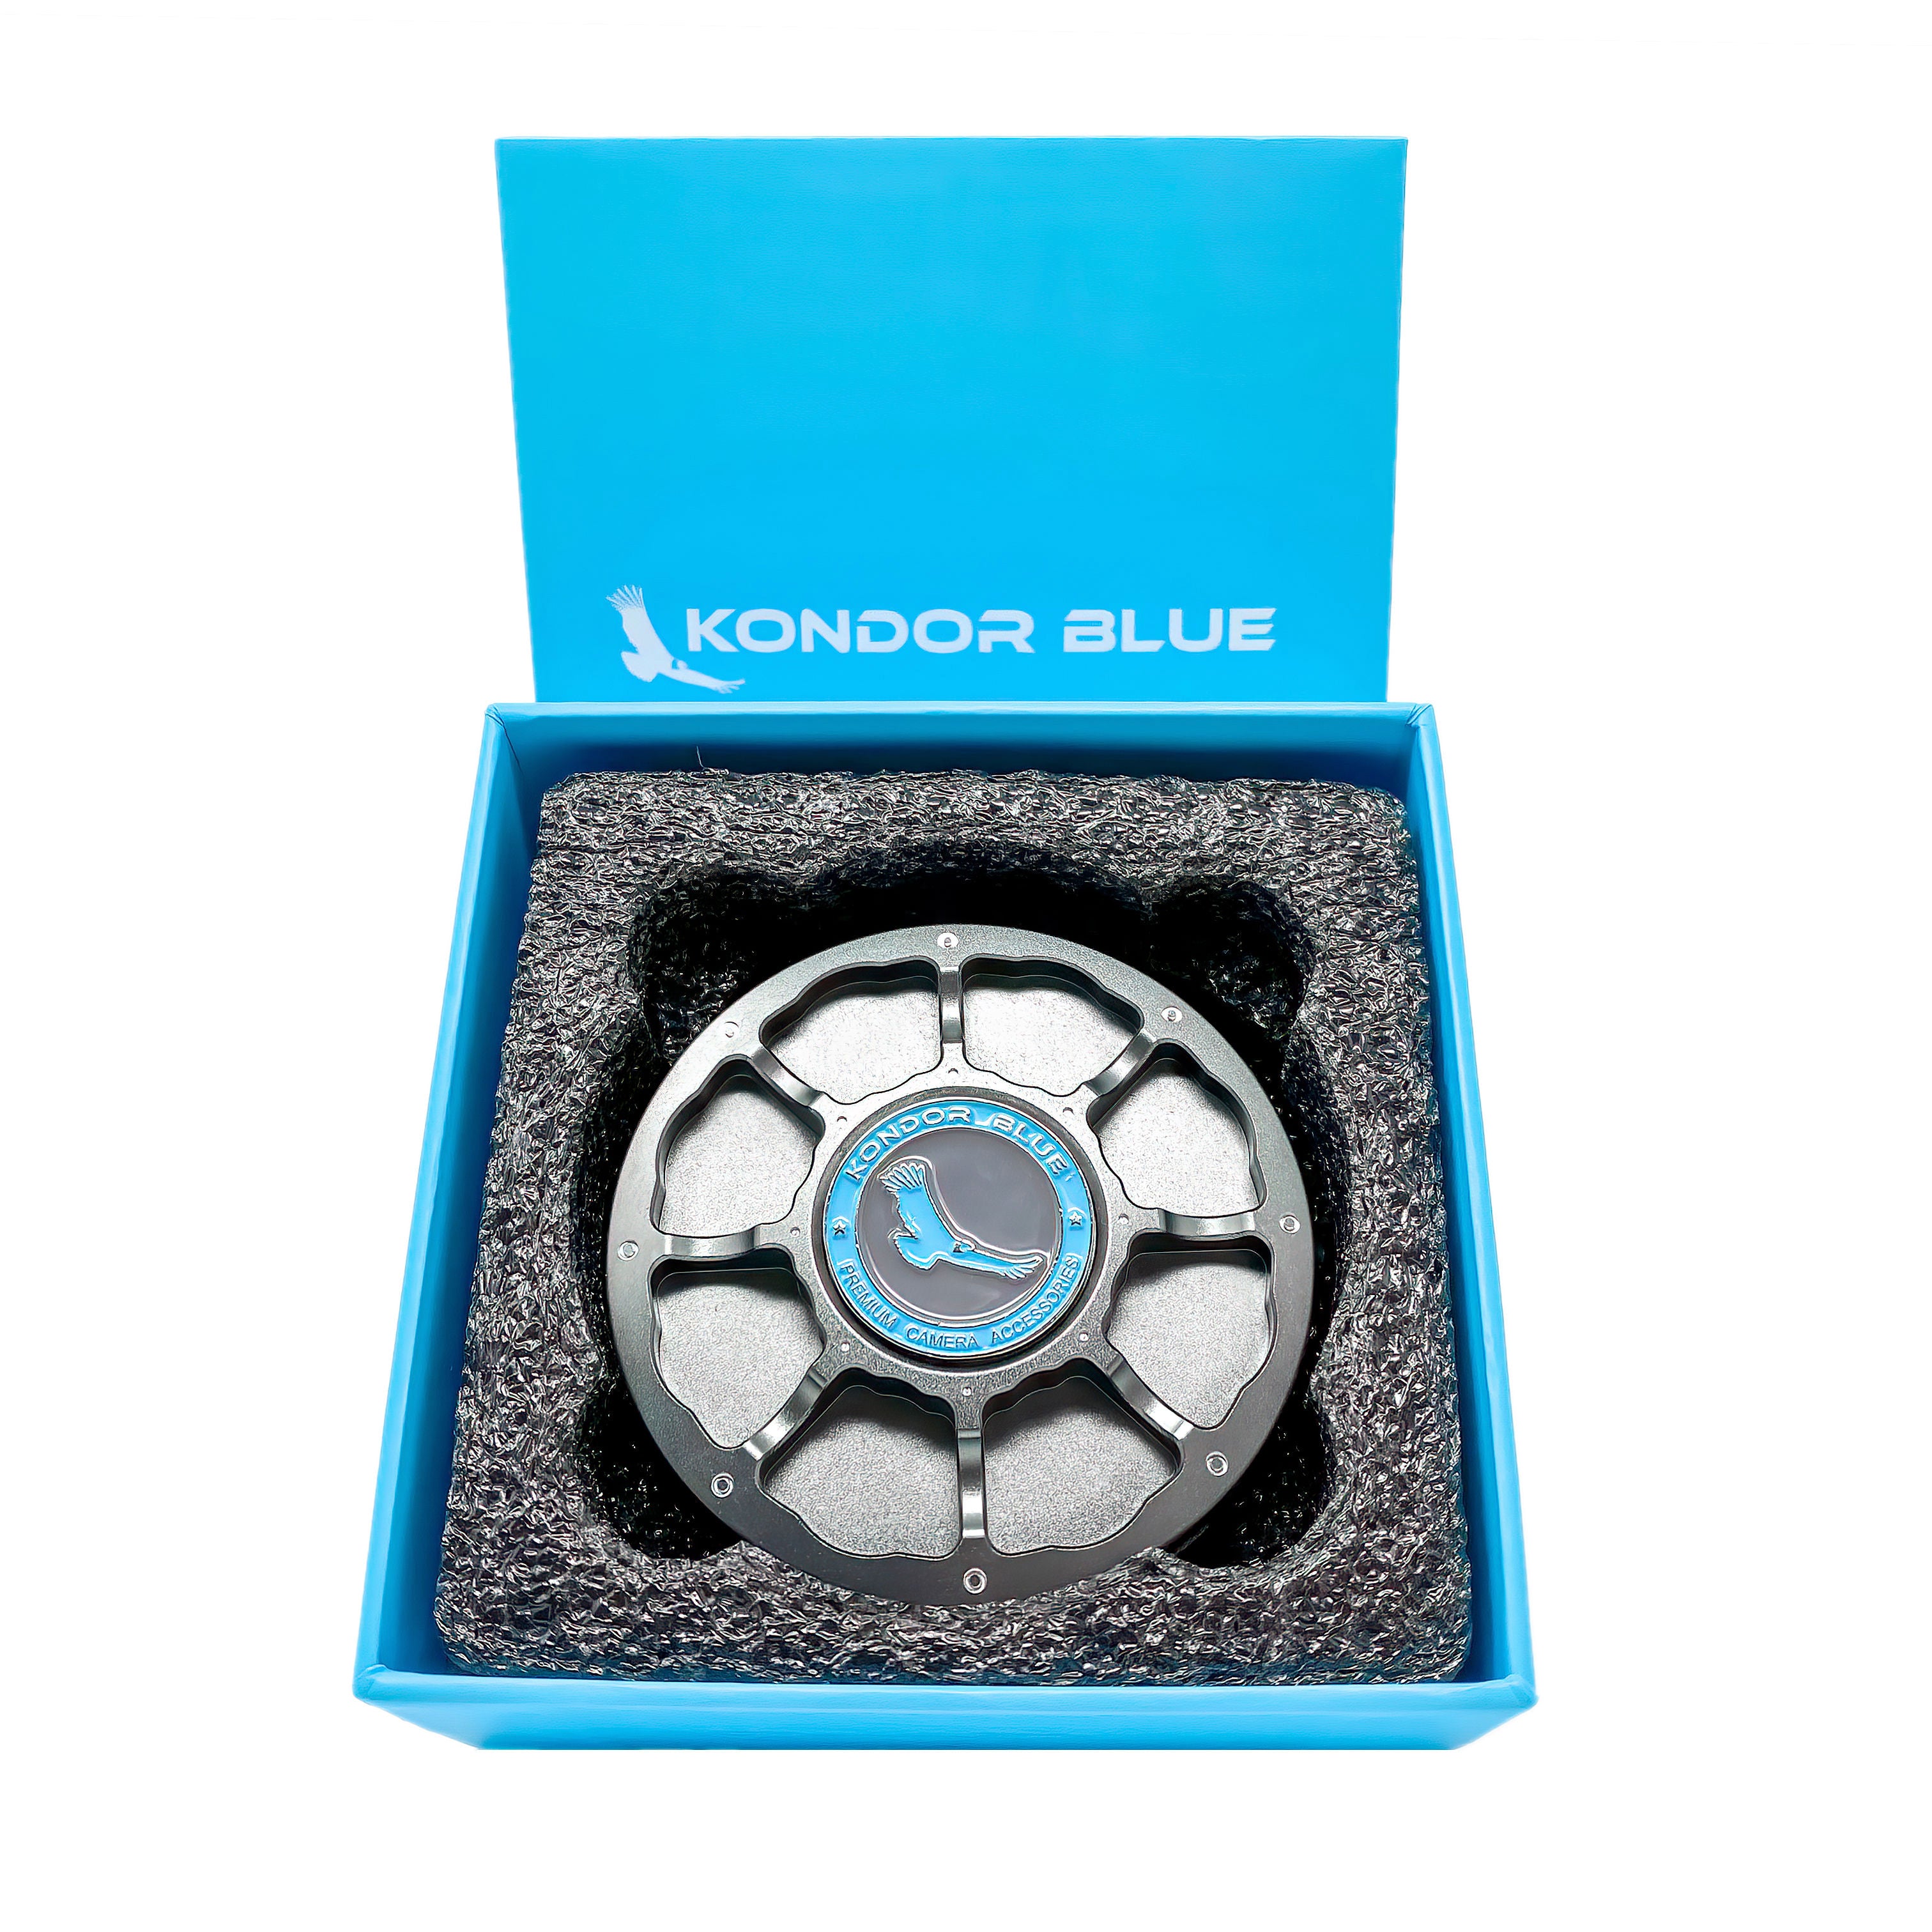 Kondor Blue Arri PL Cine Cap Metal Body Cap for Camera Lens Port (Space Gray)